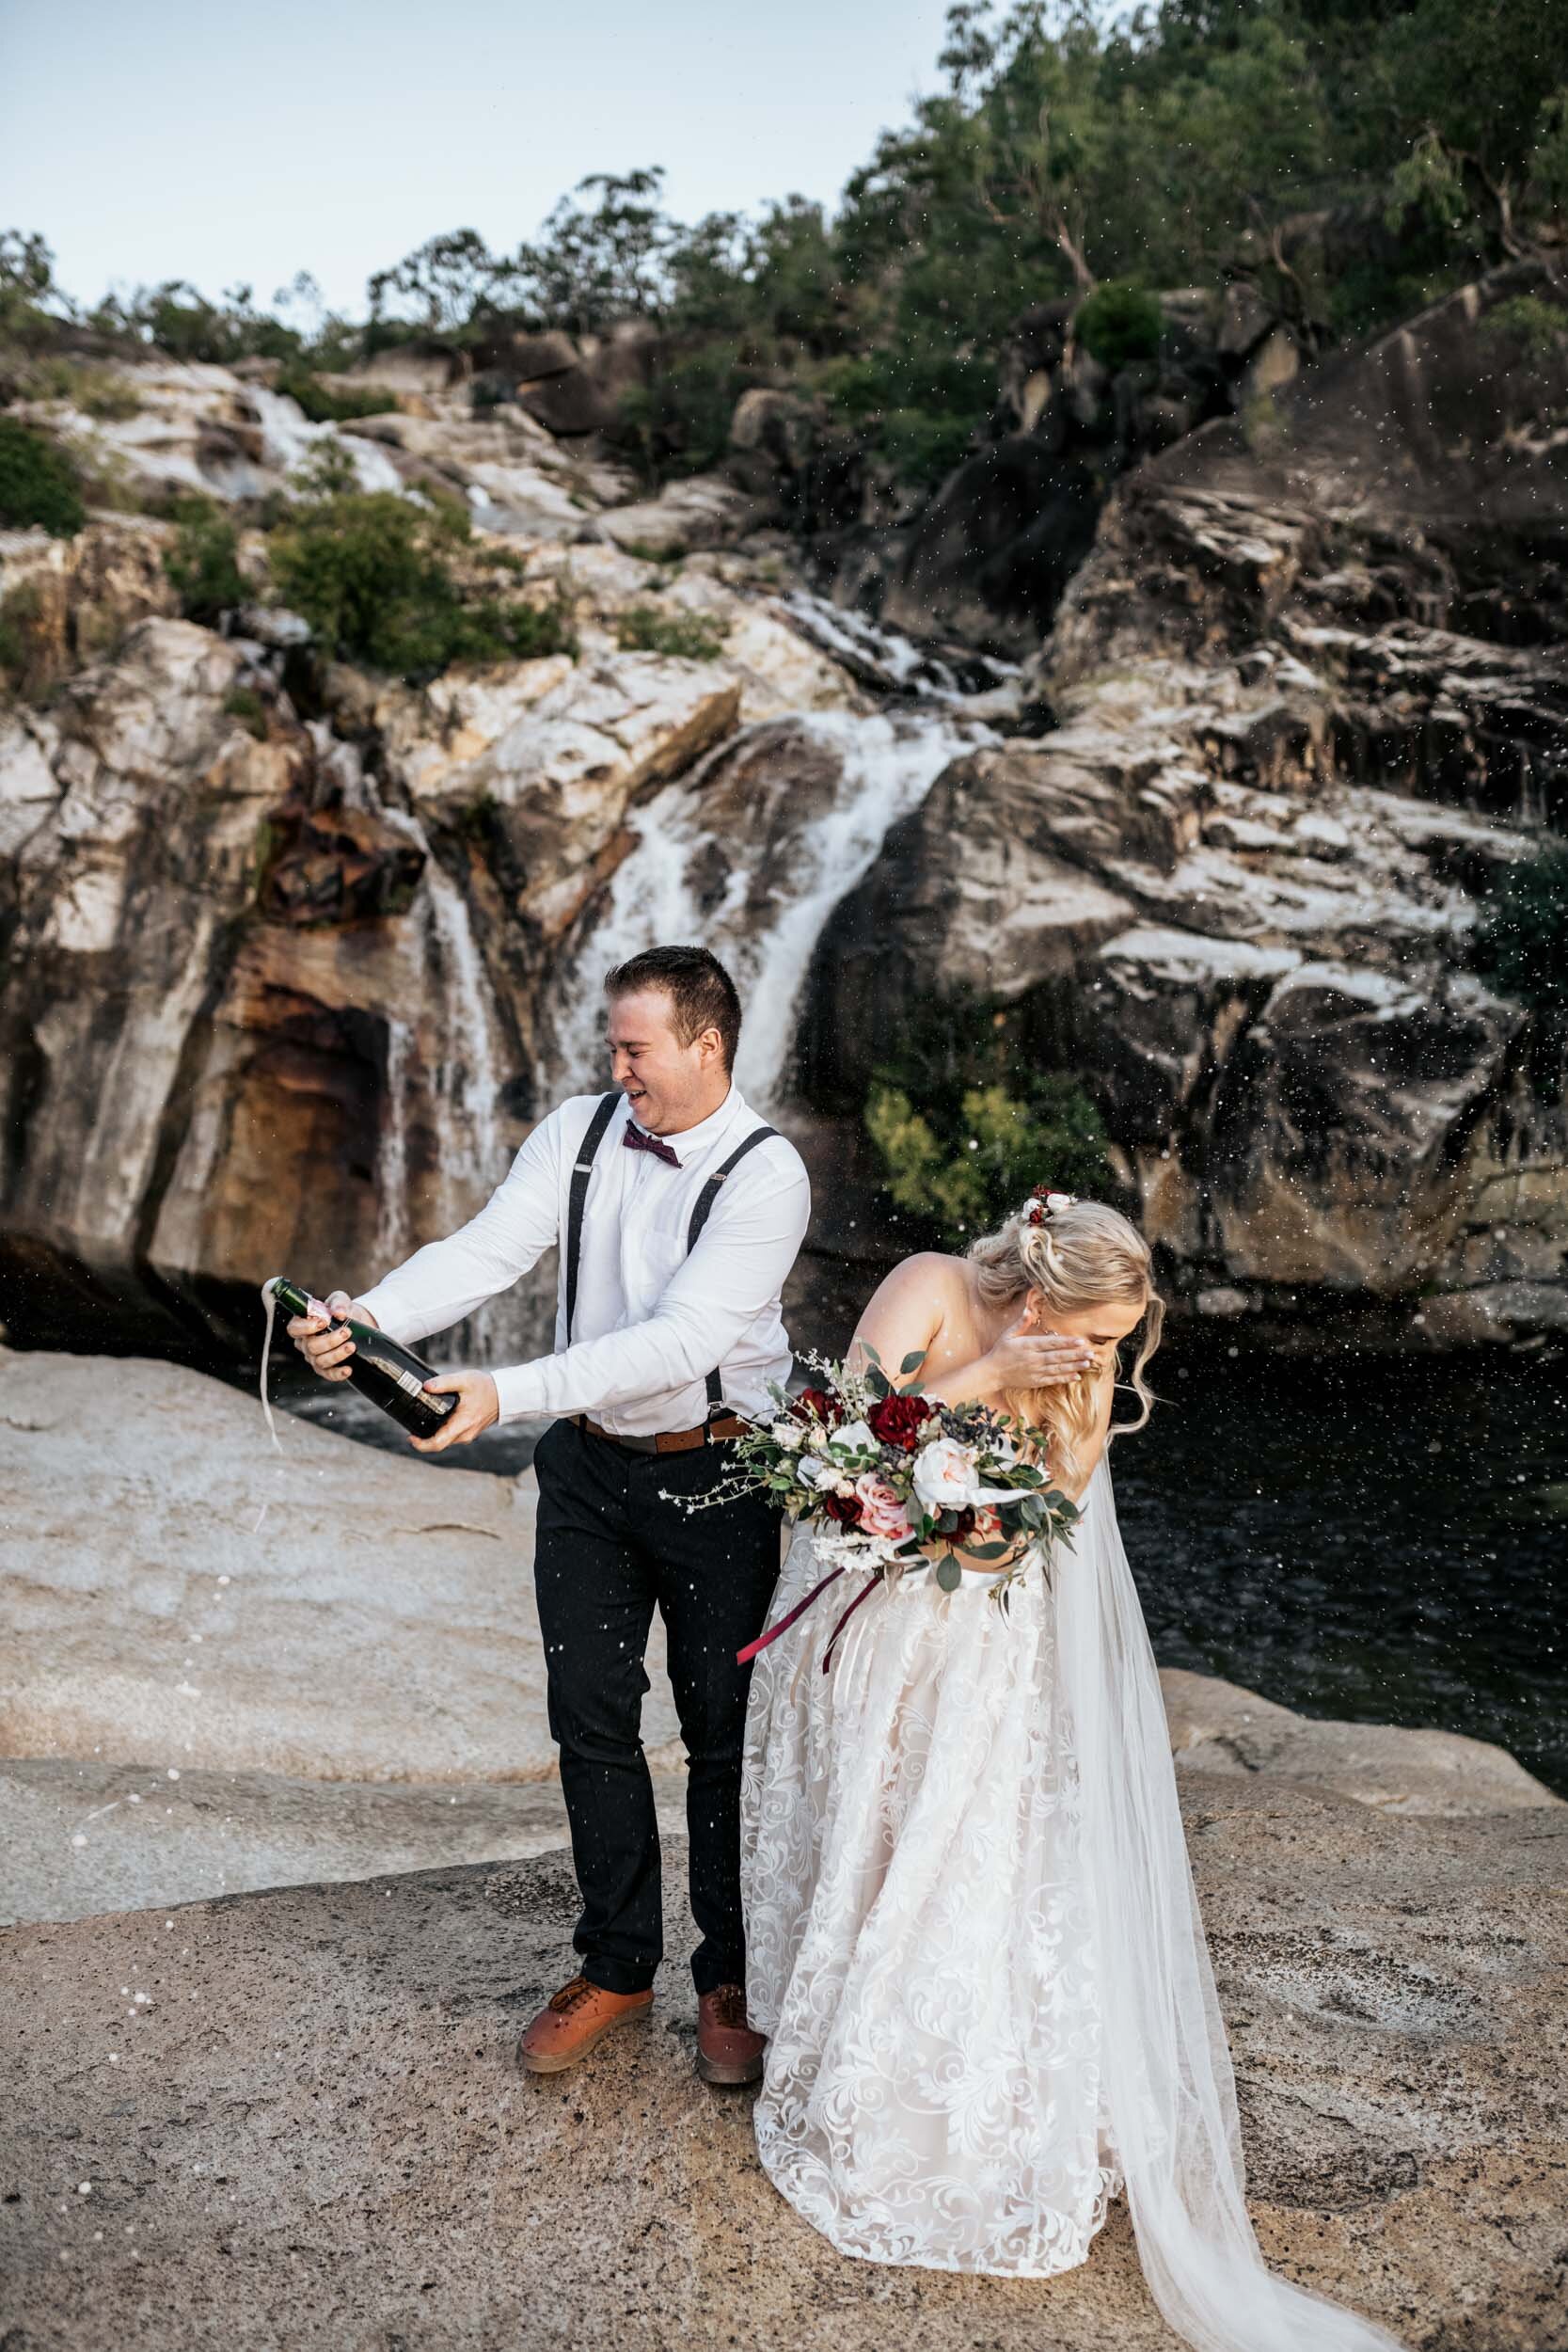 The Raw Photographer - Cairns Wedding Photographer - Queensland Adventure Elopment Photography - Emeral Creek Mareeba Tablelands-39.jpg